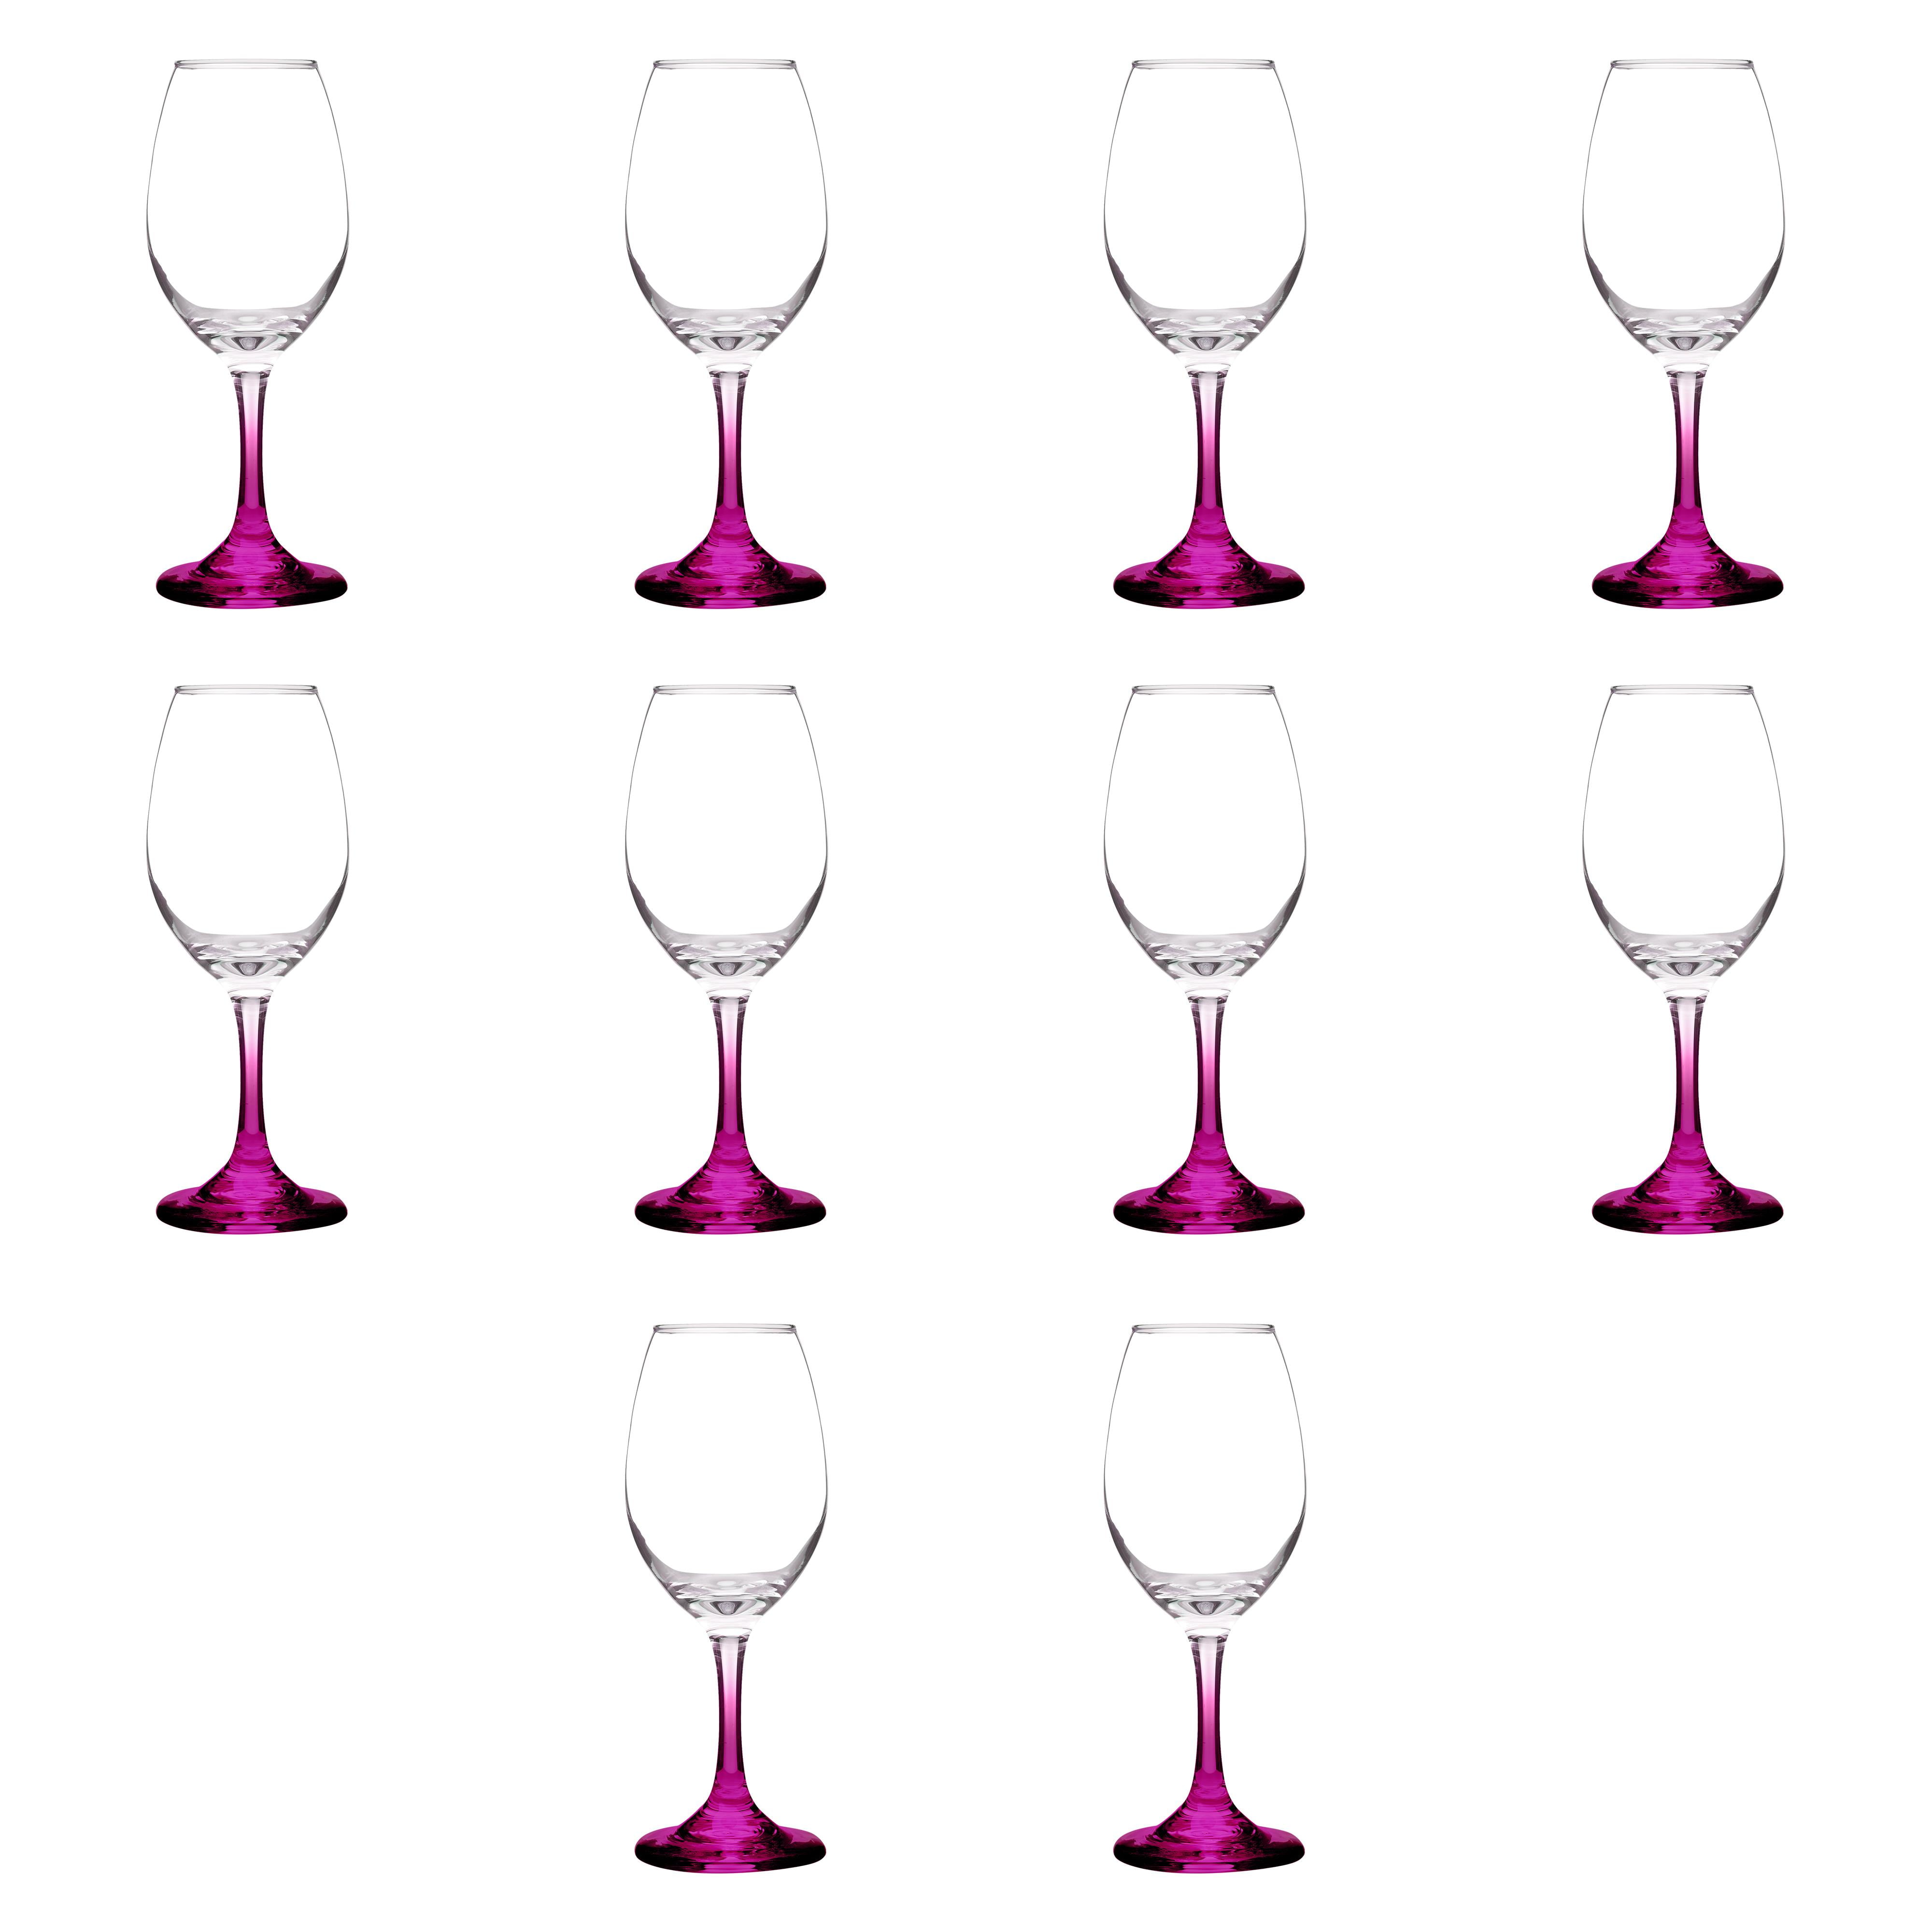 10 oz Wine Glass from Garagiste Meadery